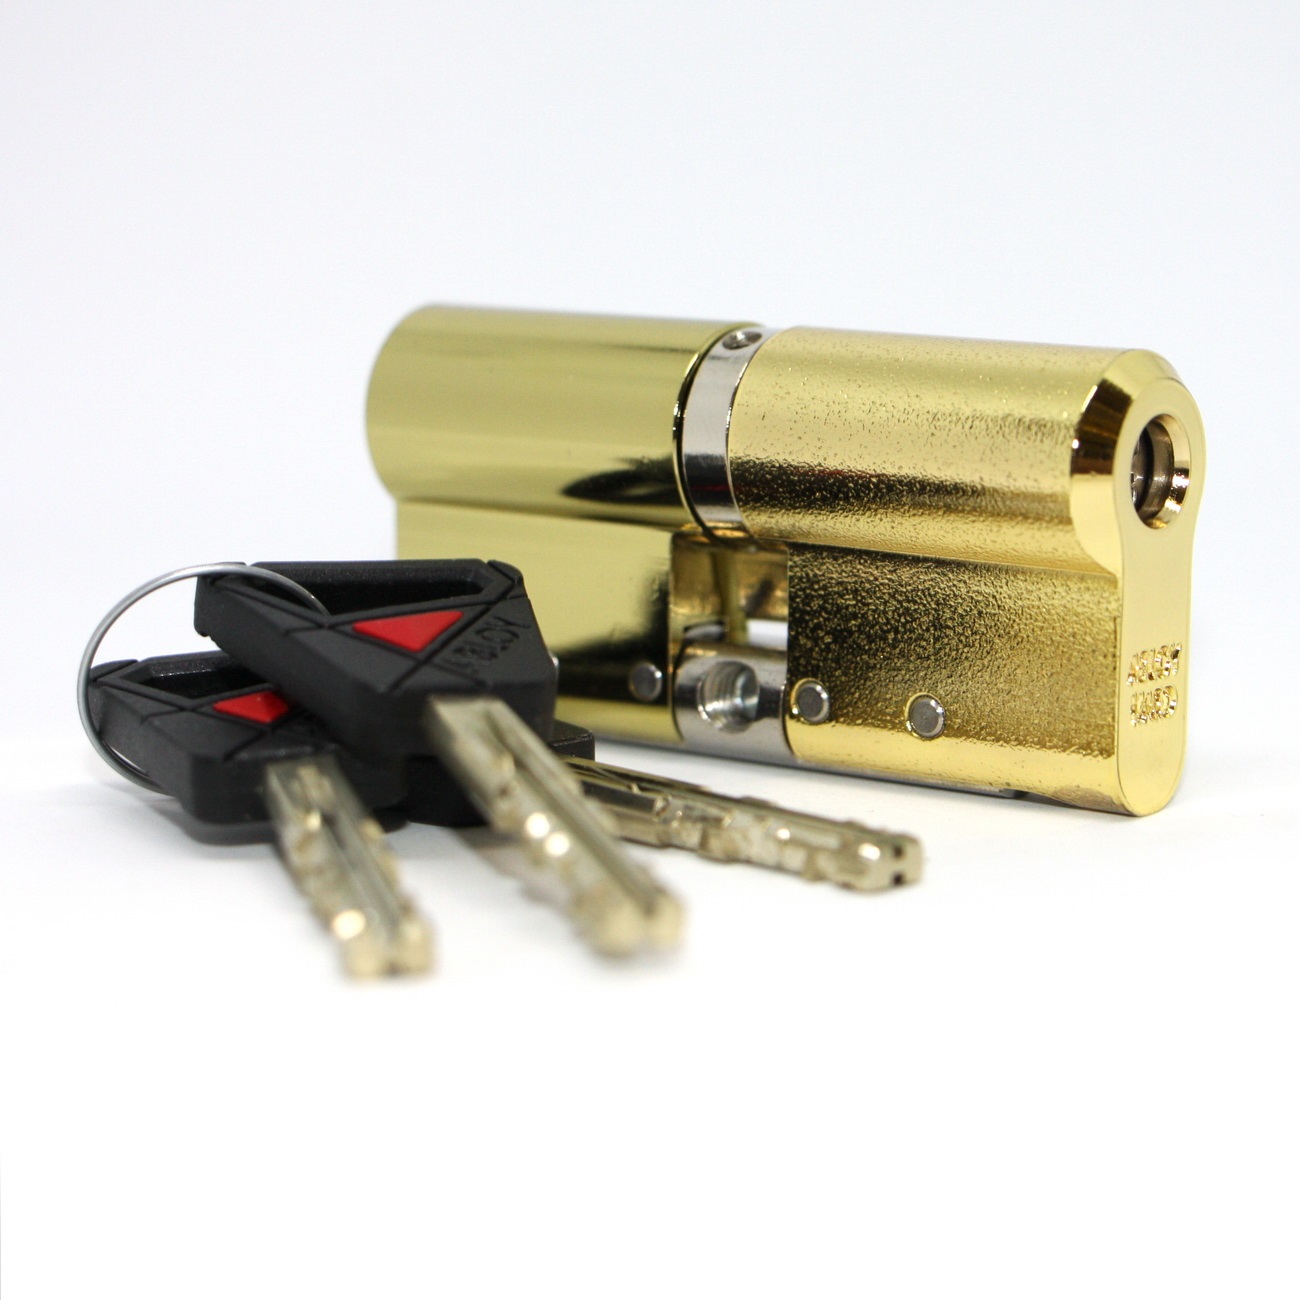 CY 332 U  bright brass/ цилиндр ключ+ключ (закаленная сталь) от производителя Аблой